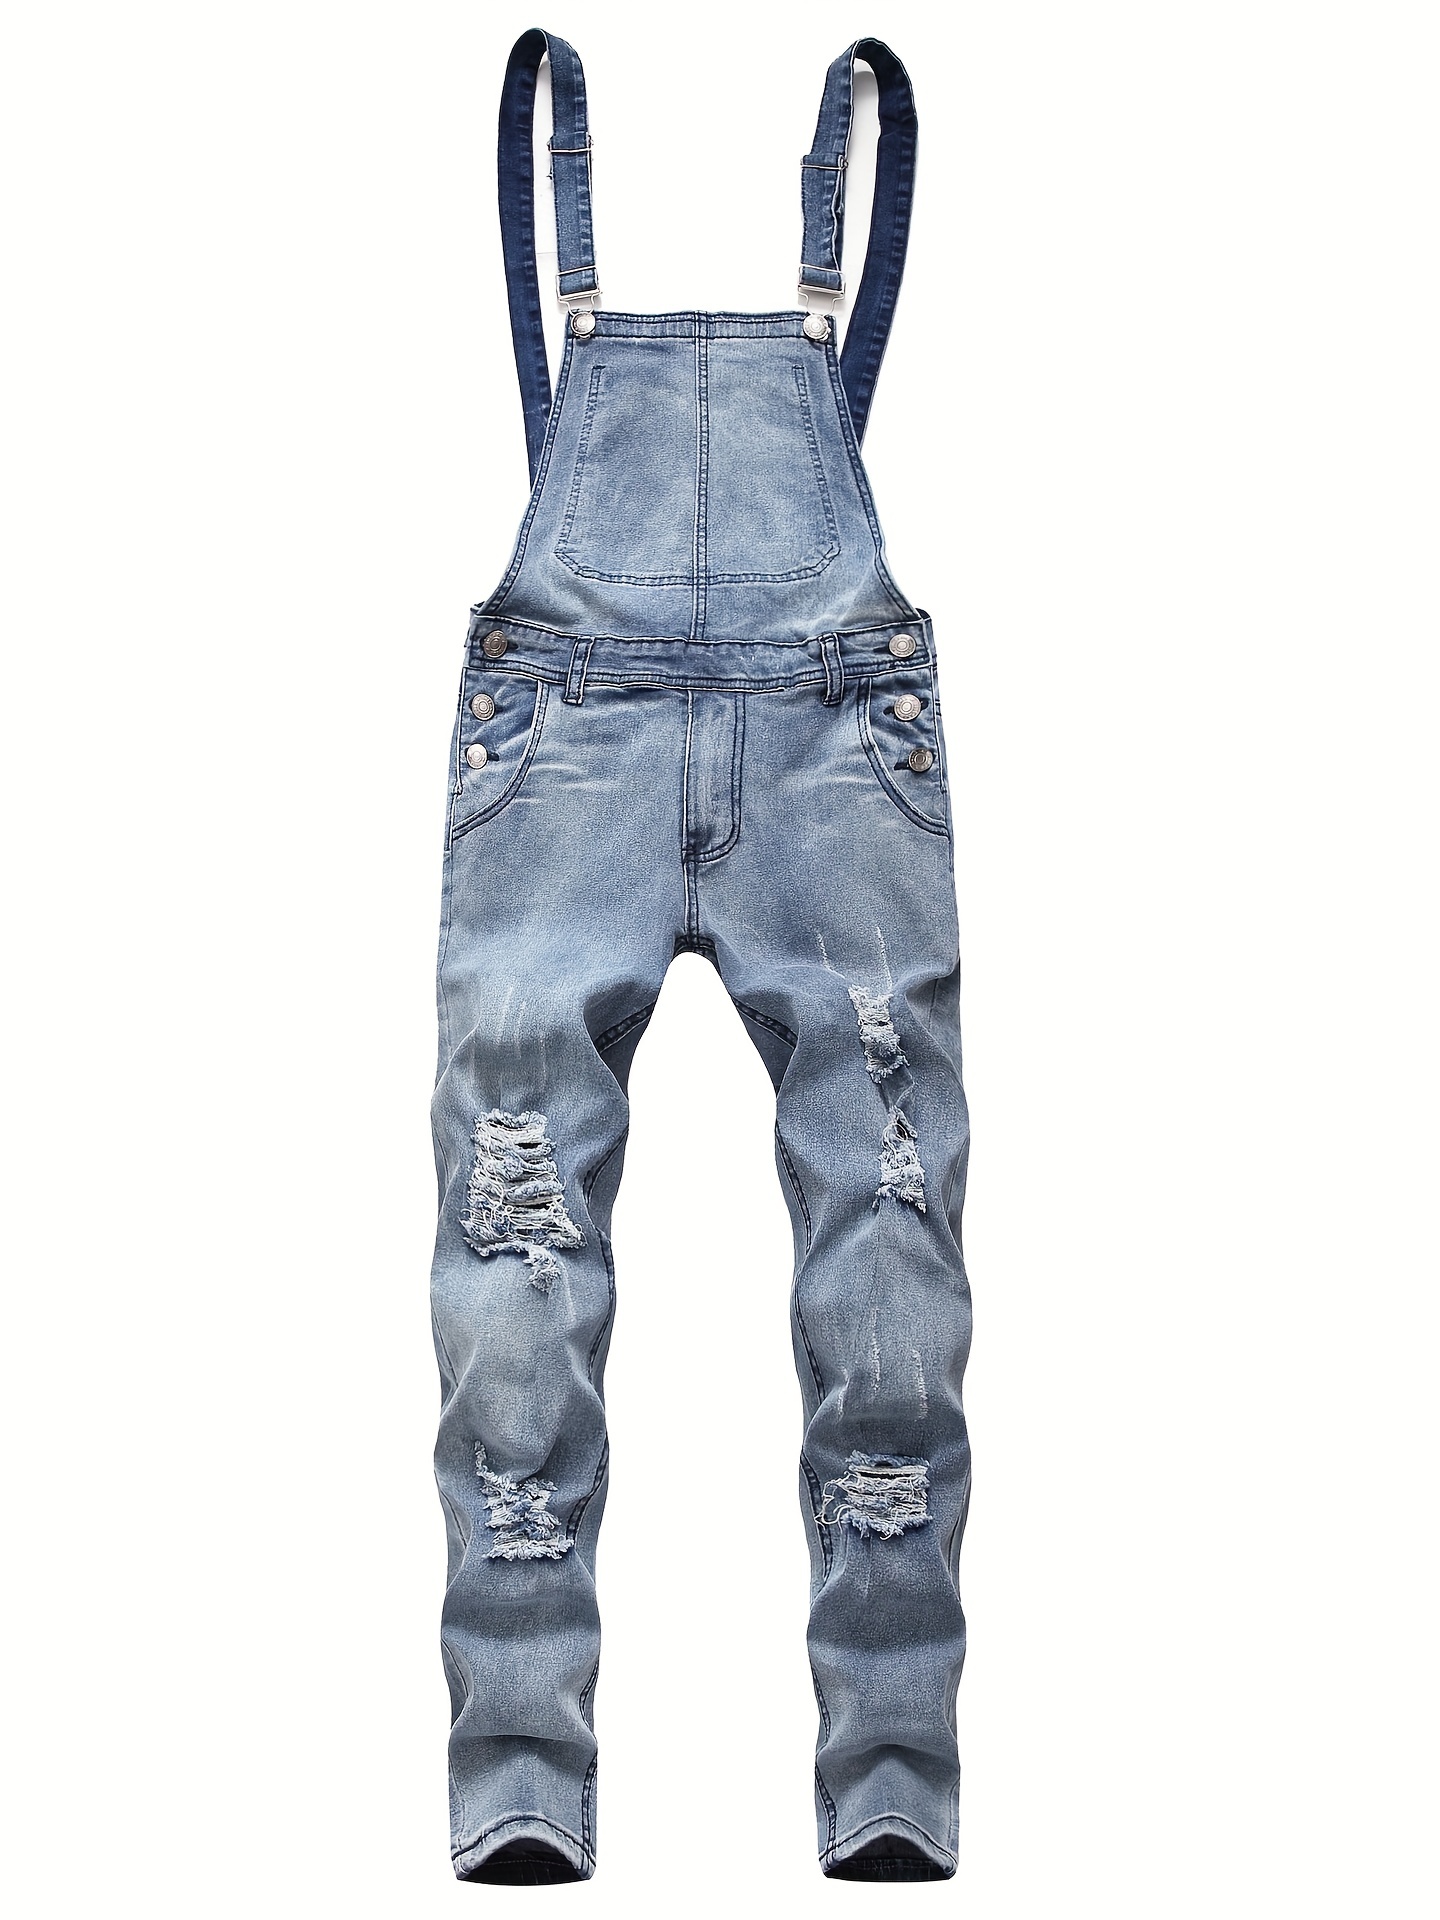 peto vaquero hombre - Google Shopping  Ripped jeans men, Ripped denim  jumpsuit, Ripped denim